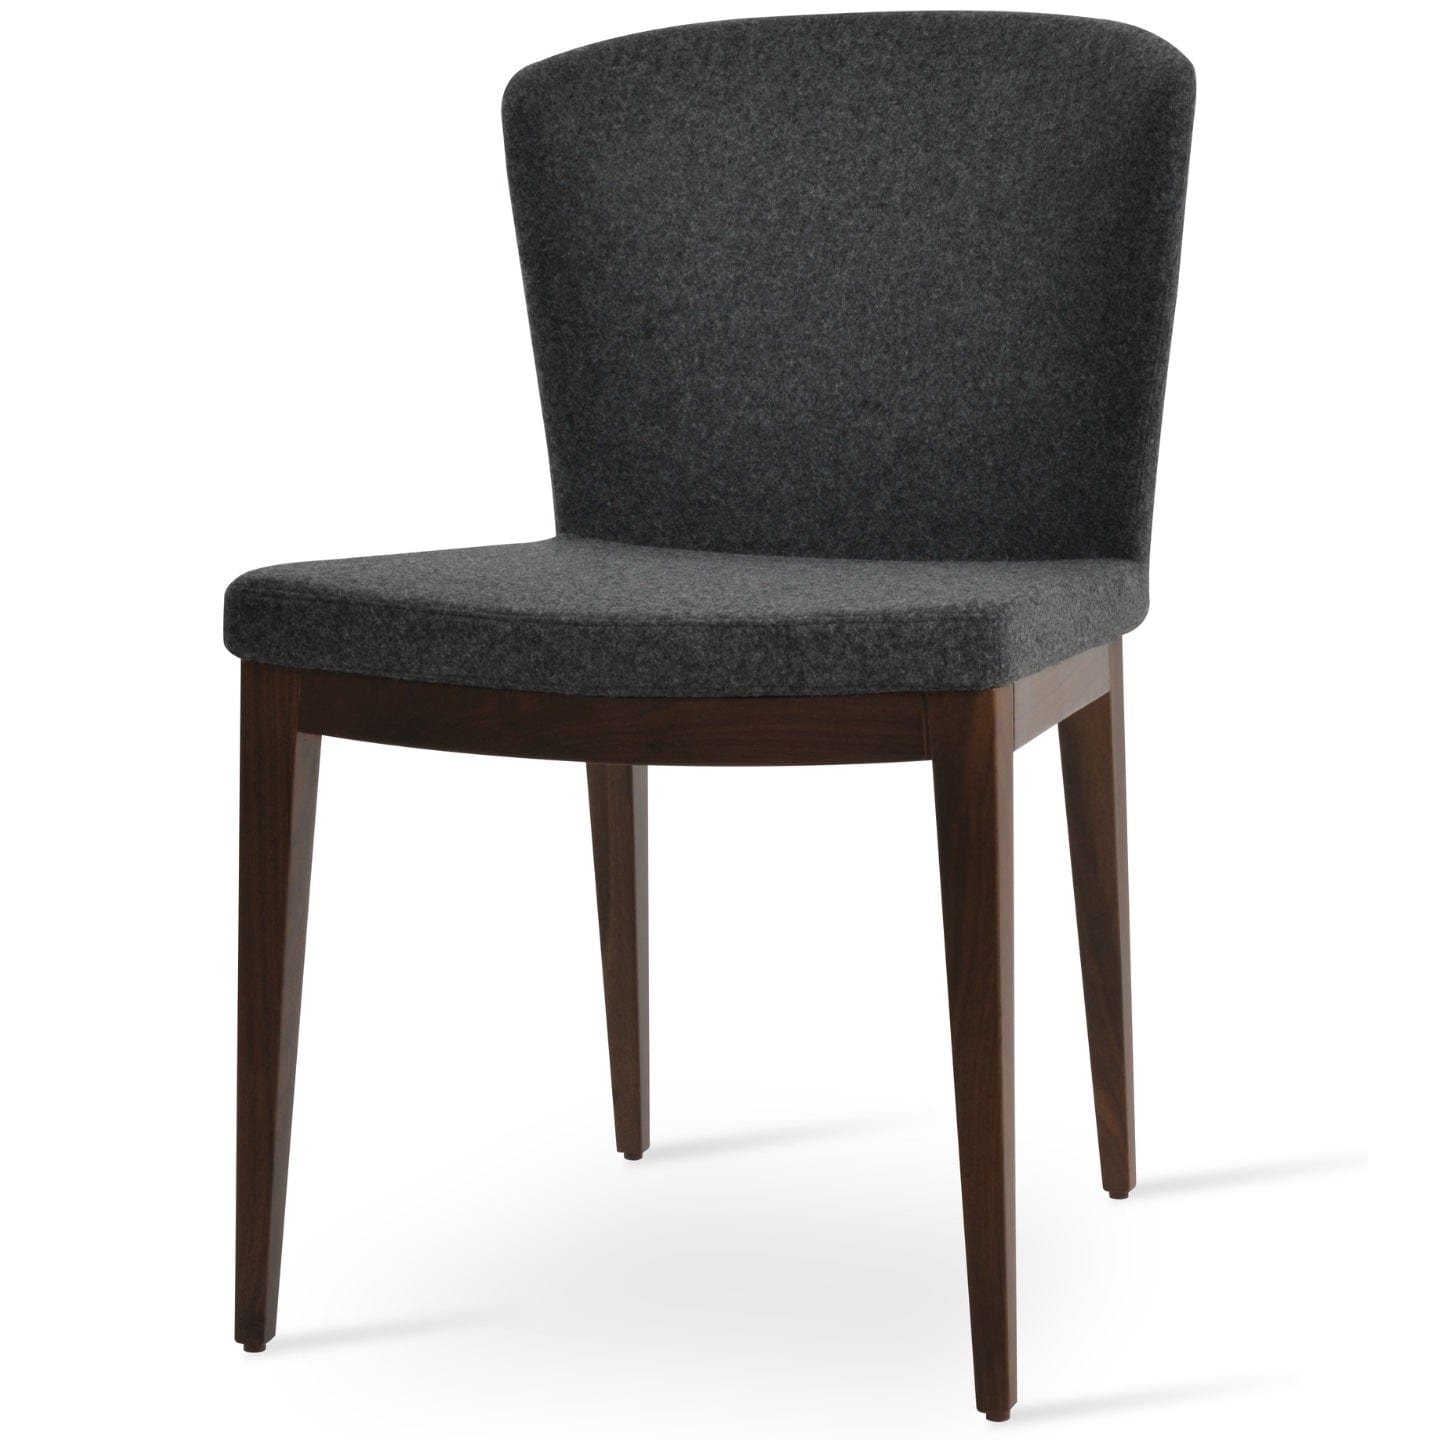 sohoConcept Kitchen & Dining Room Chairs Capri Wood Chairs | Wool Upholstered Wooden Dining Chairs